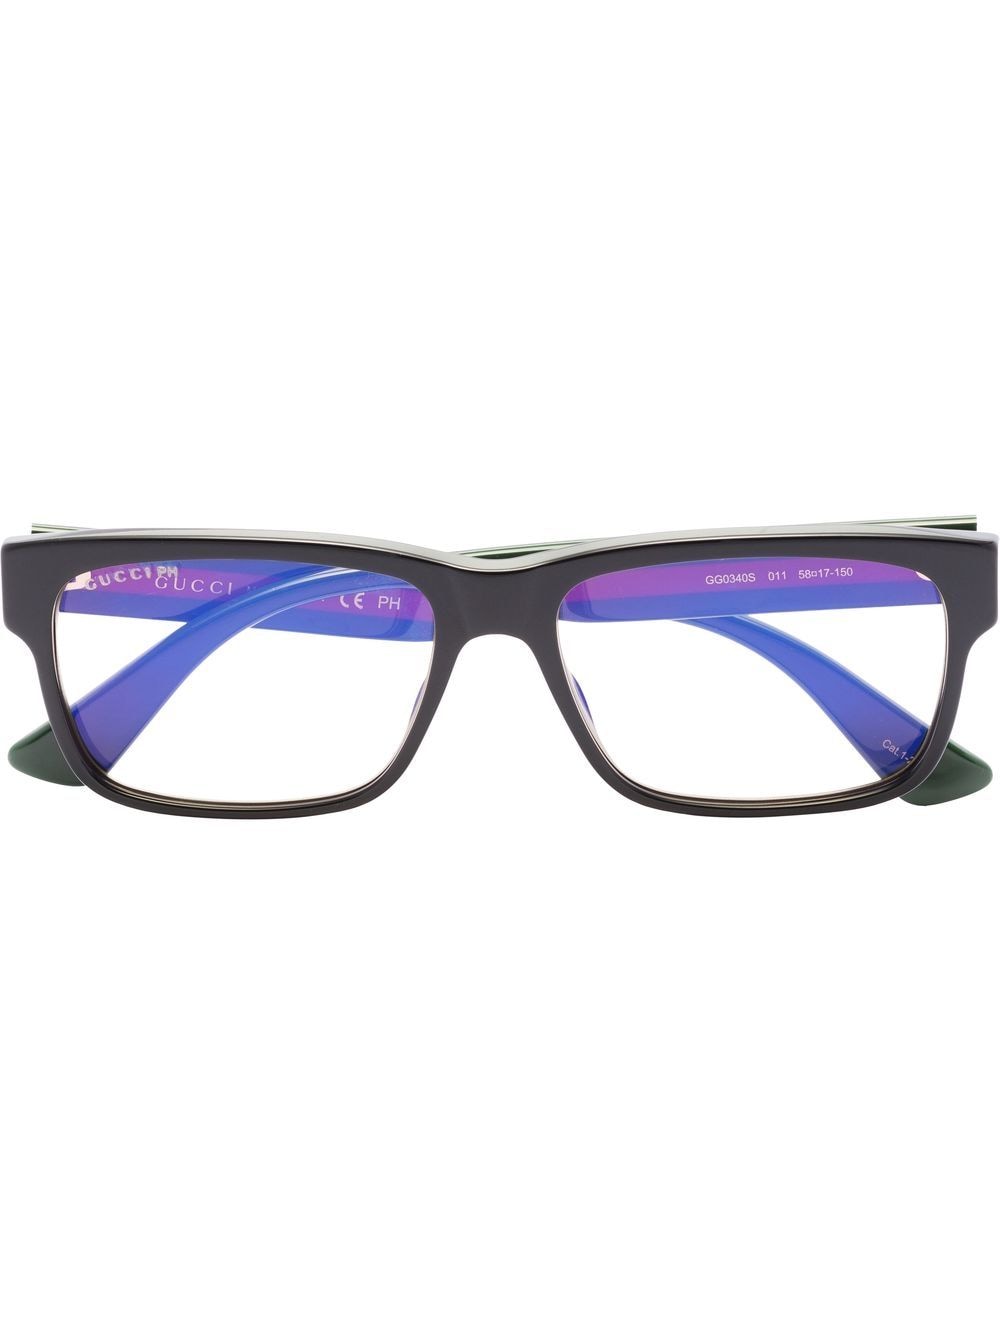 Gucci Black Rectangle Blue Light Optical Glasses